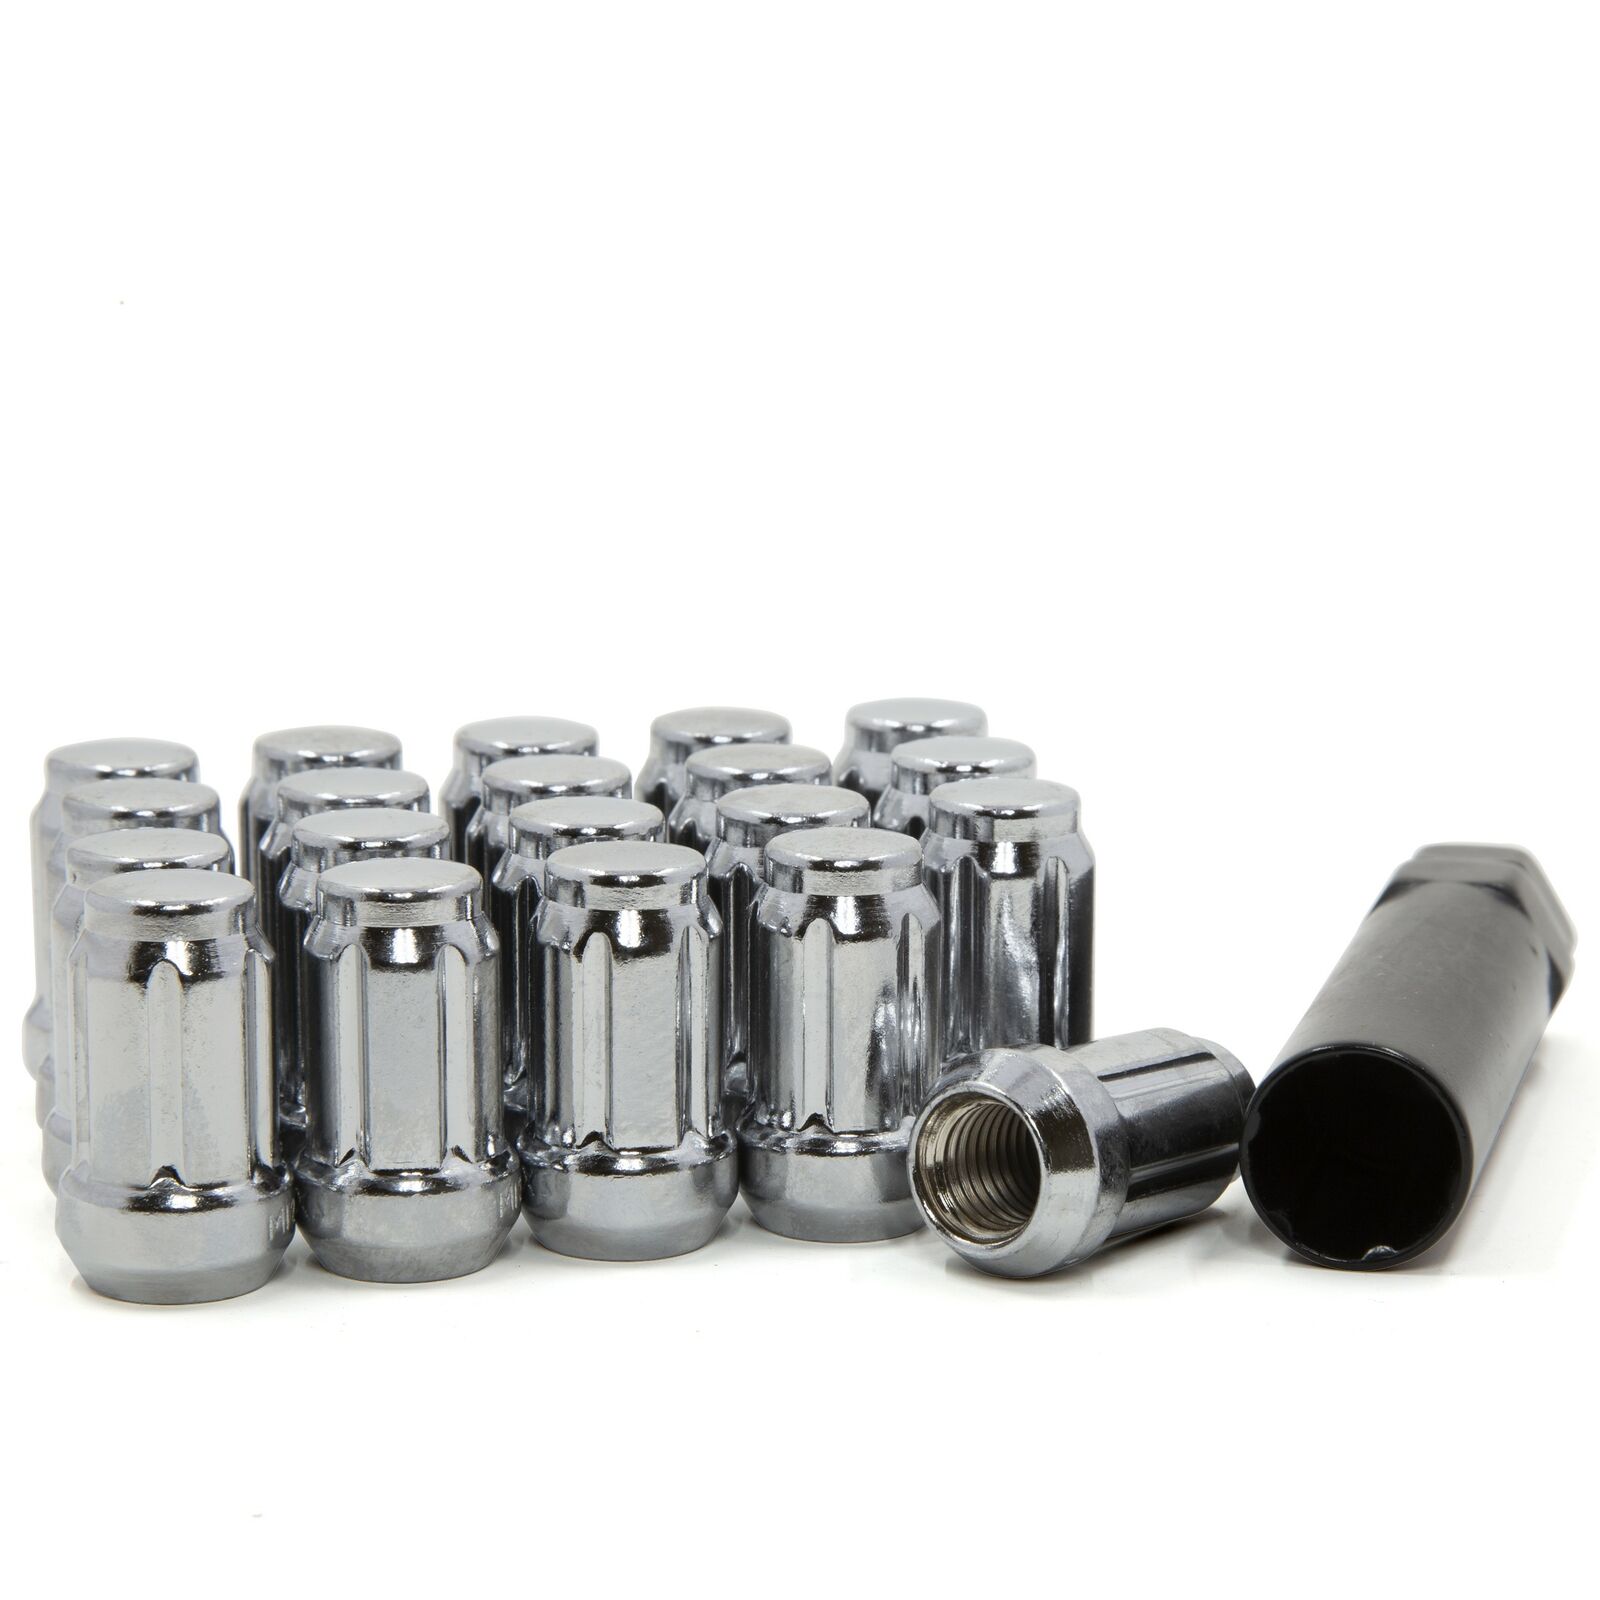 Lug Nuts Tuner Spline Acorn 7/16 Chrome 20 Pieces +Key